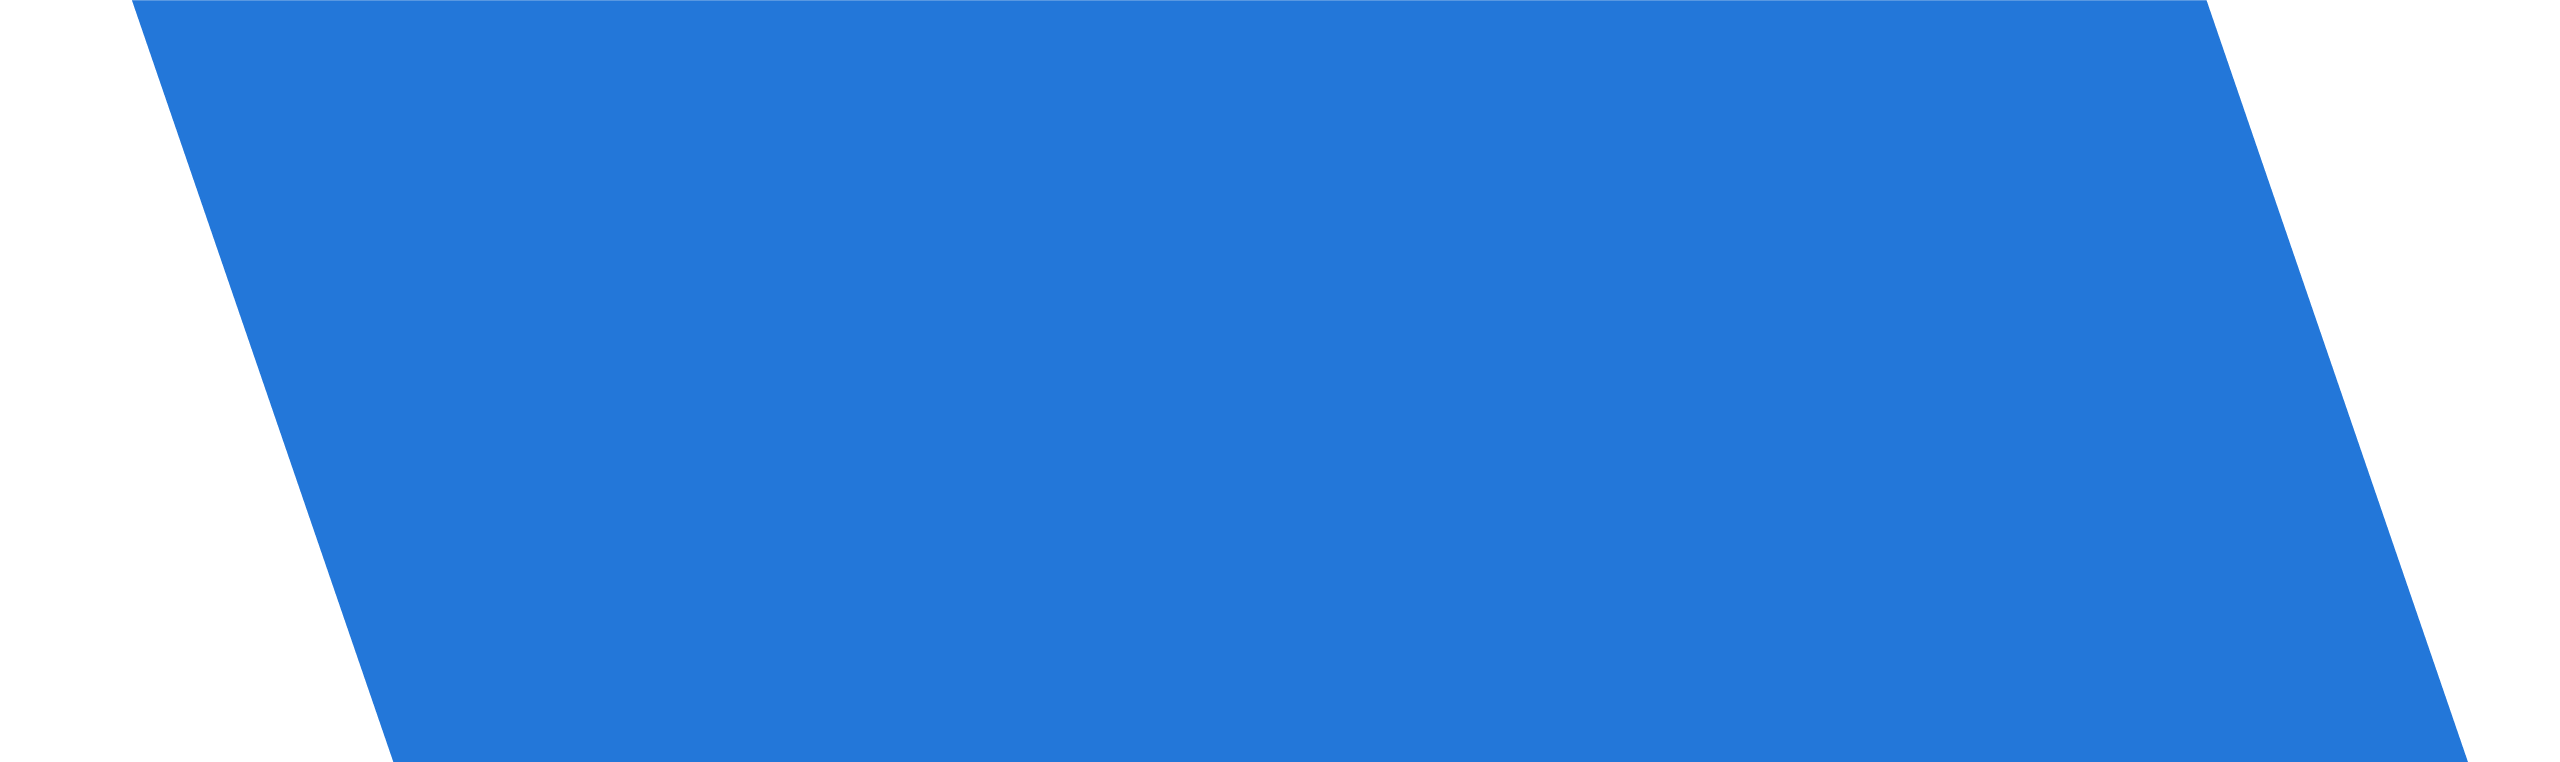 Blue Trapezoid Logo - Blue Trapezoid | TruFit Fitness